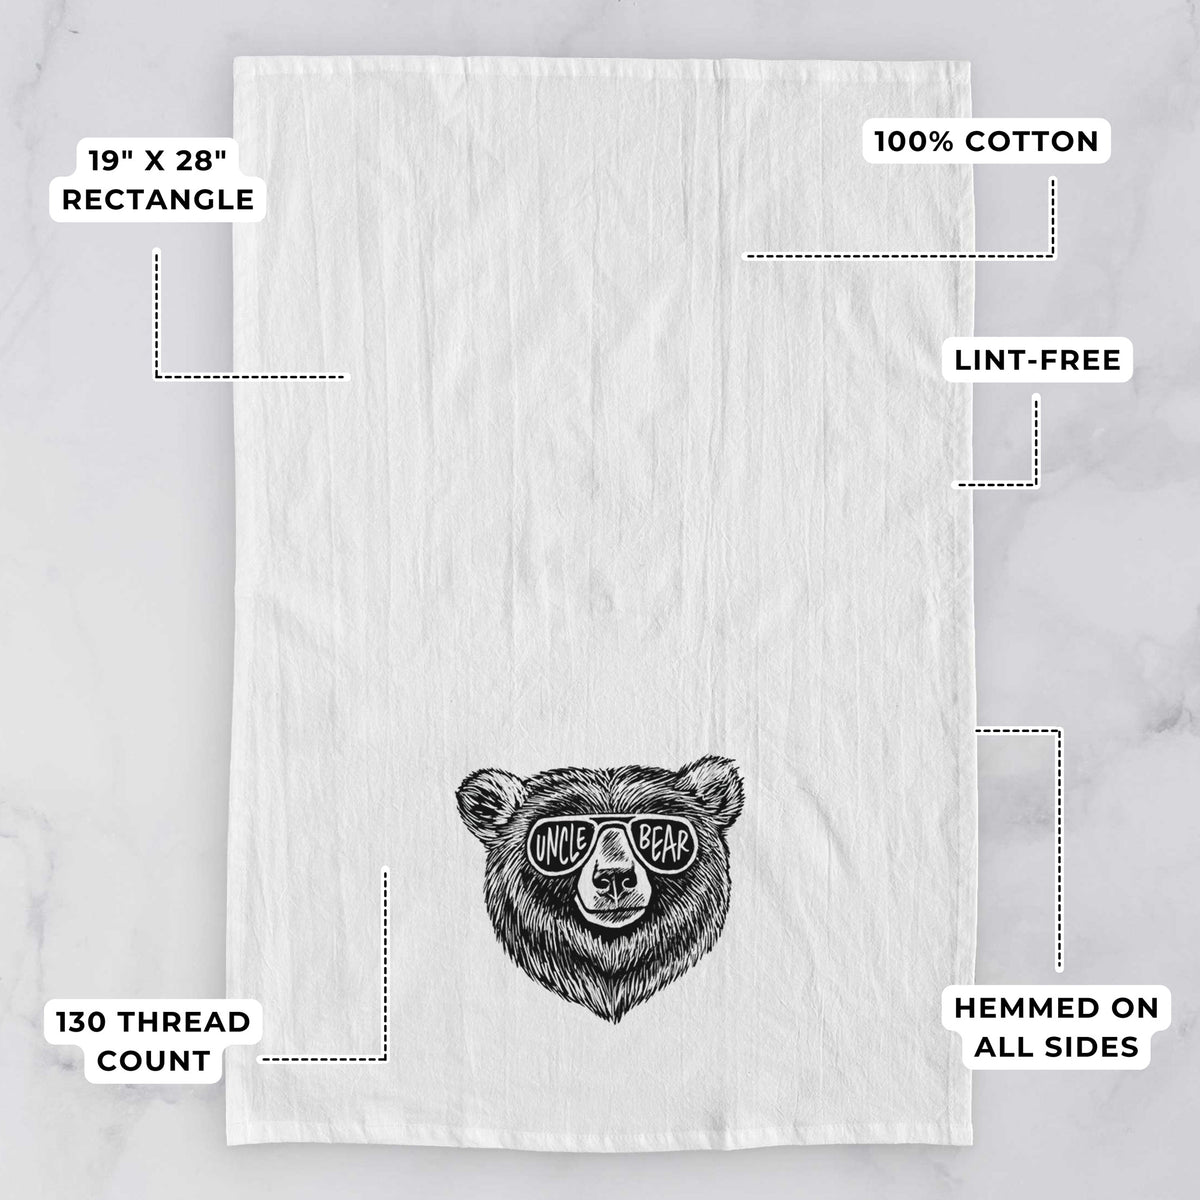 Uncle Bear Tea Towel